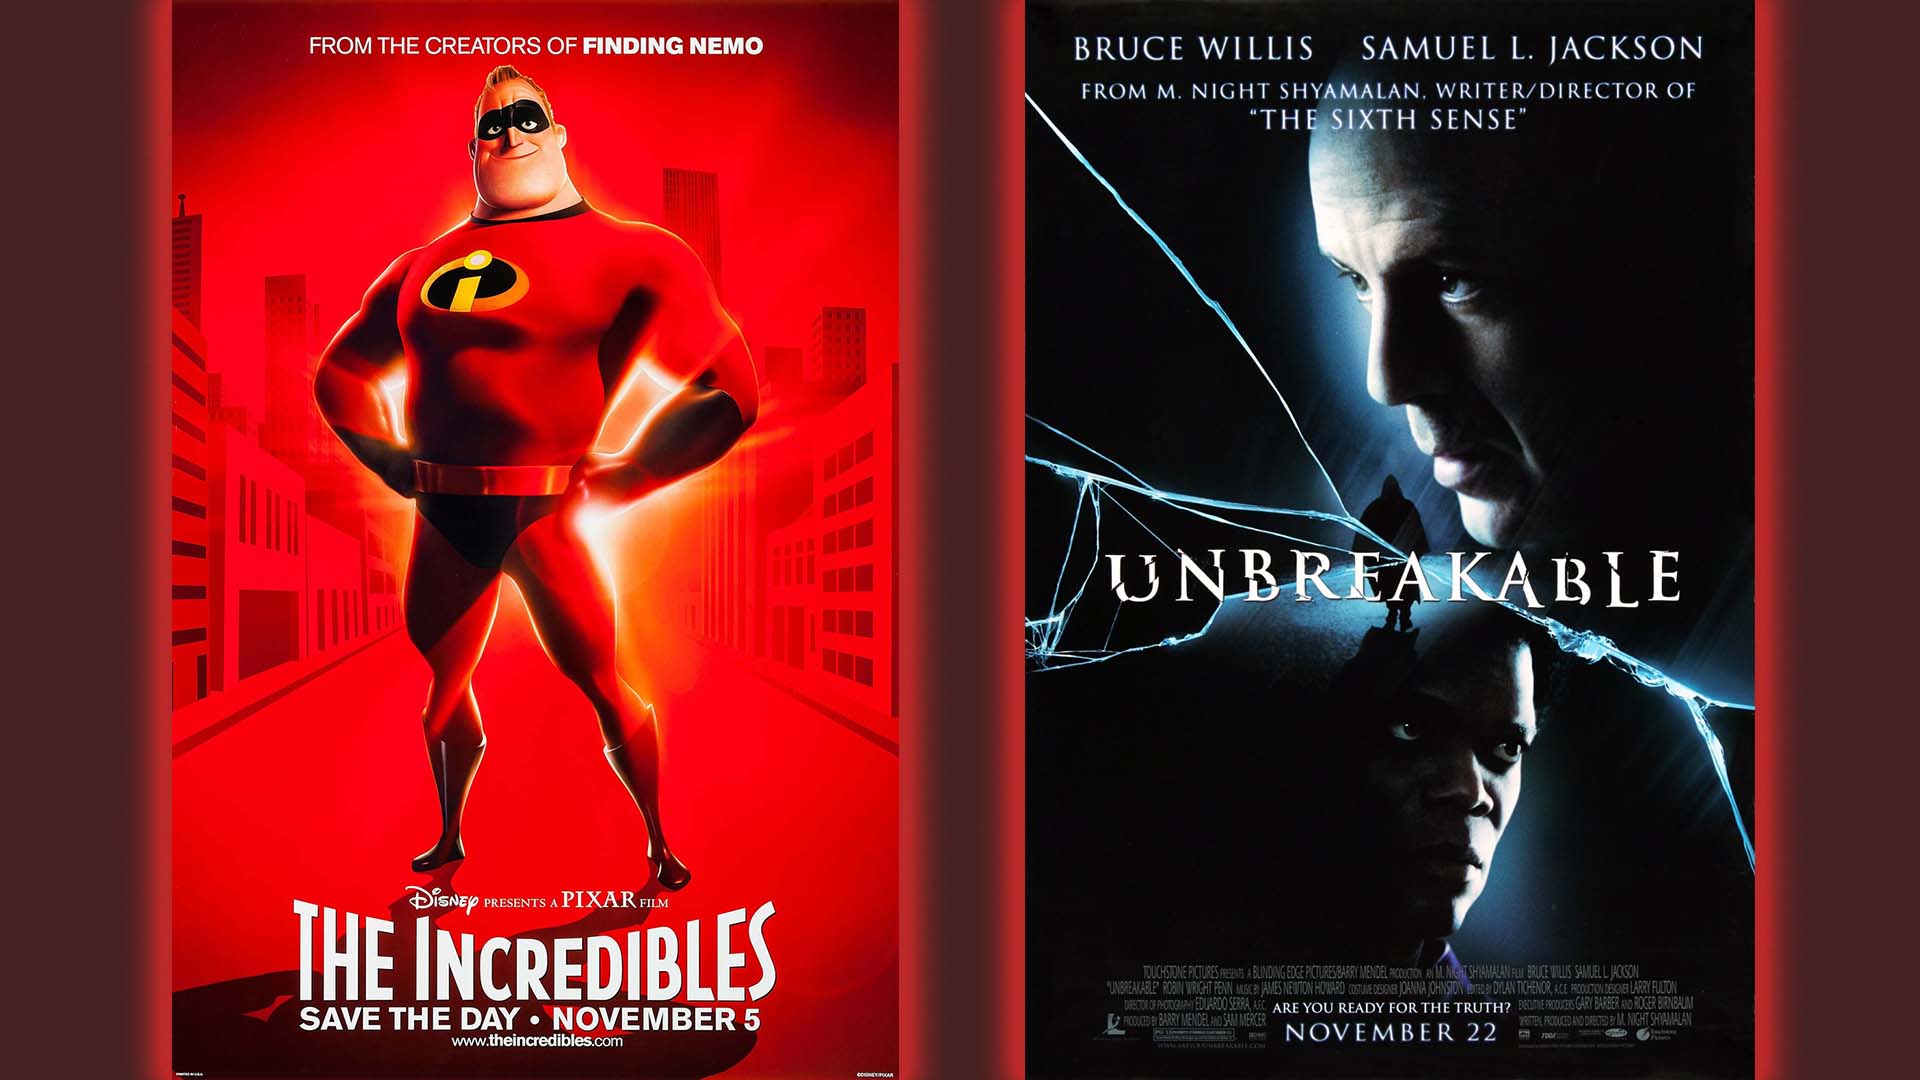 The 30 Best Superhero Movies, Ranked